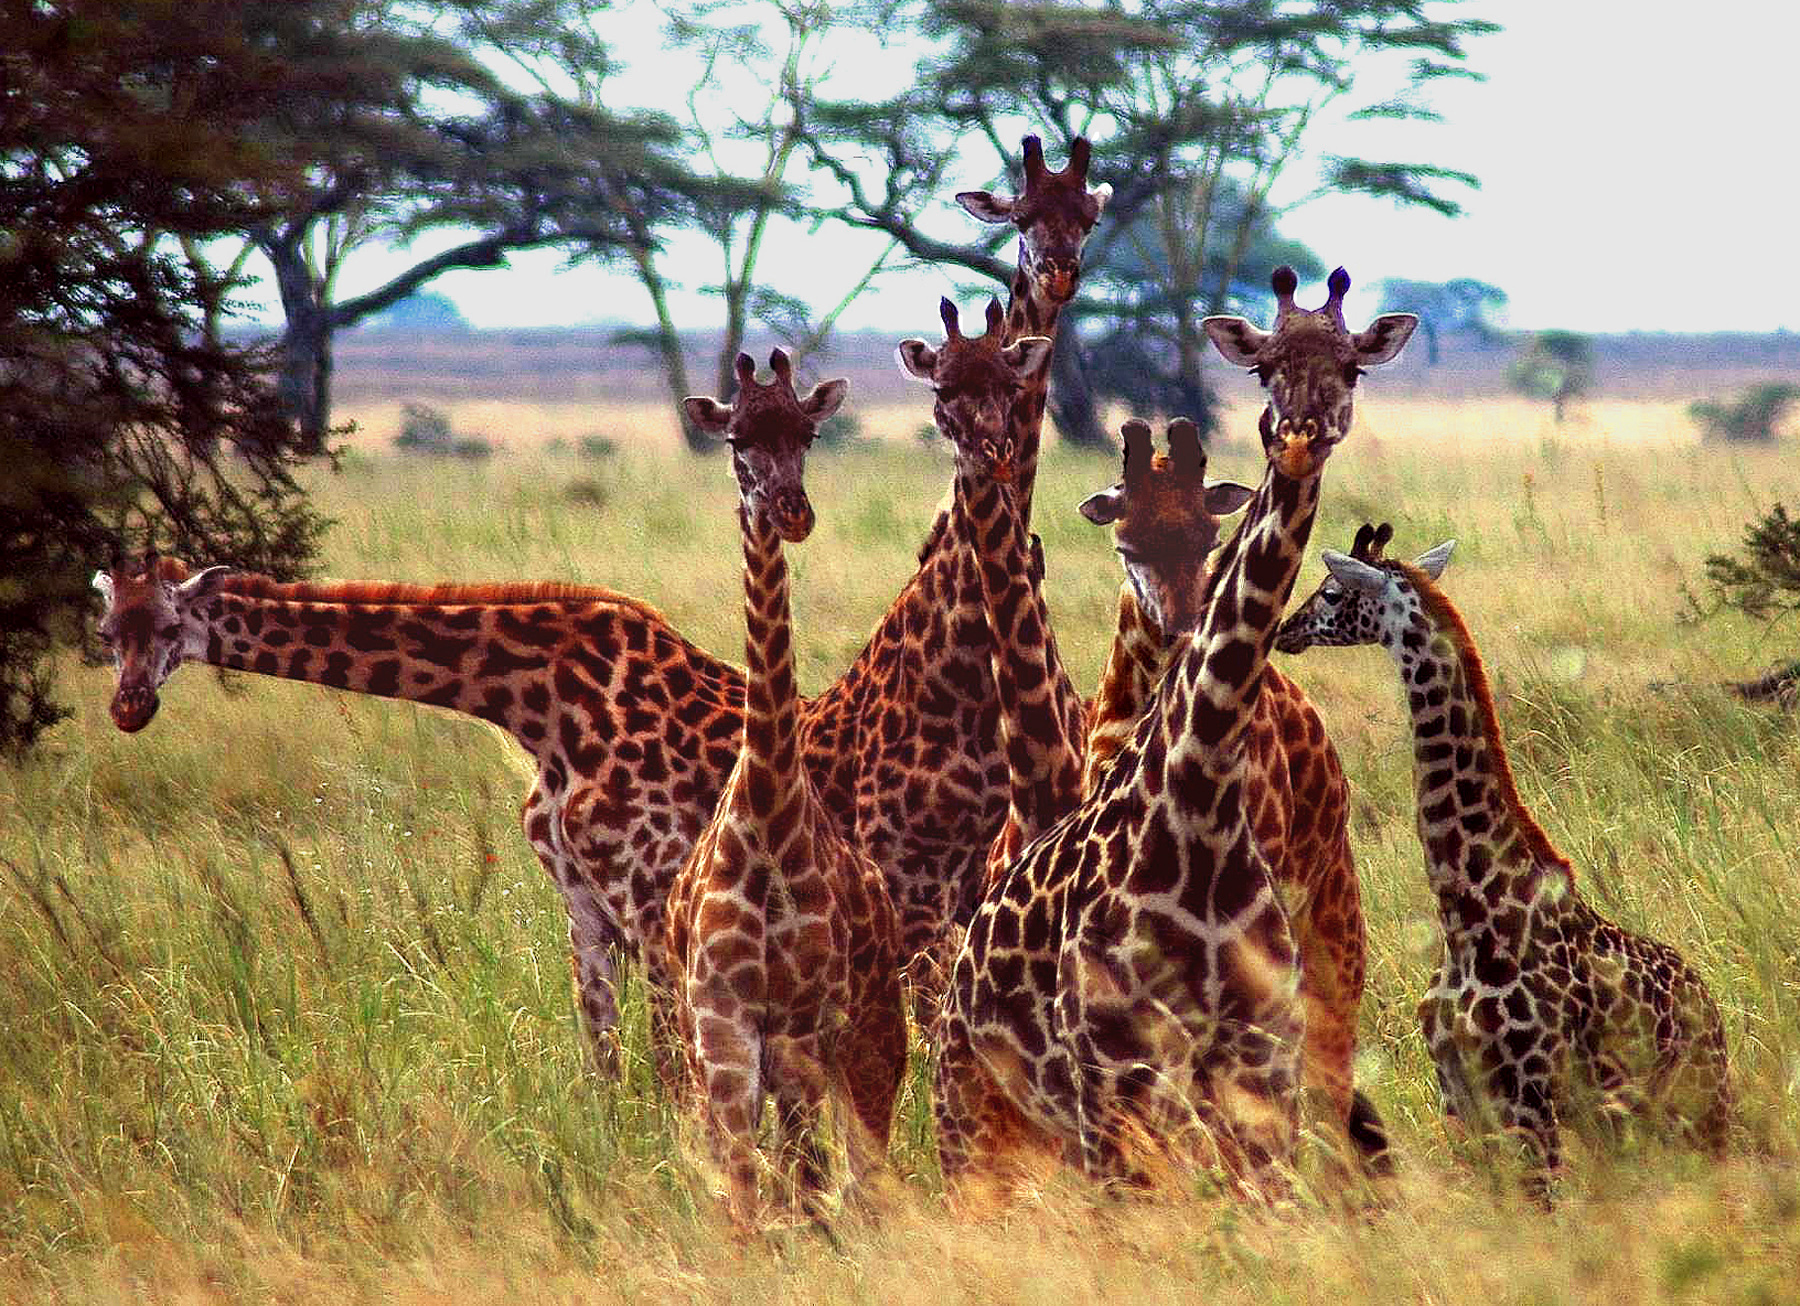 Website - A02 - 7 Giraffes in Serengeti